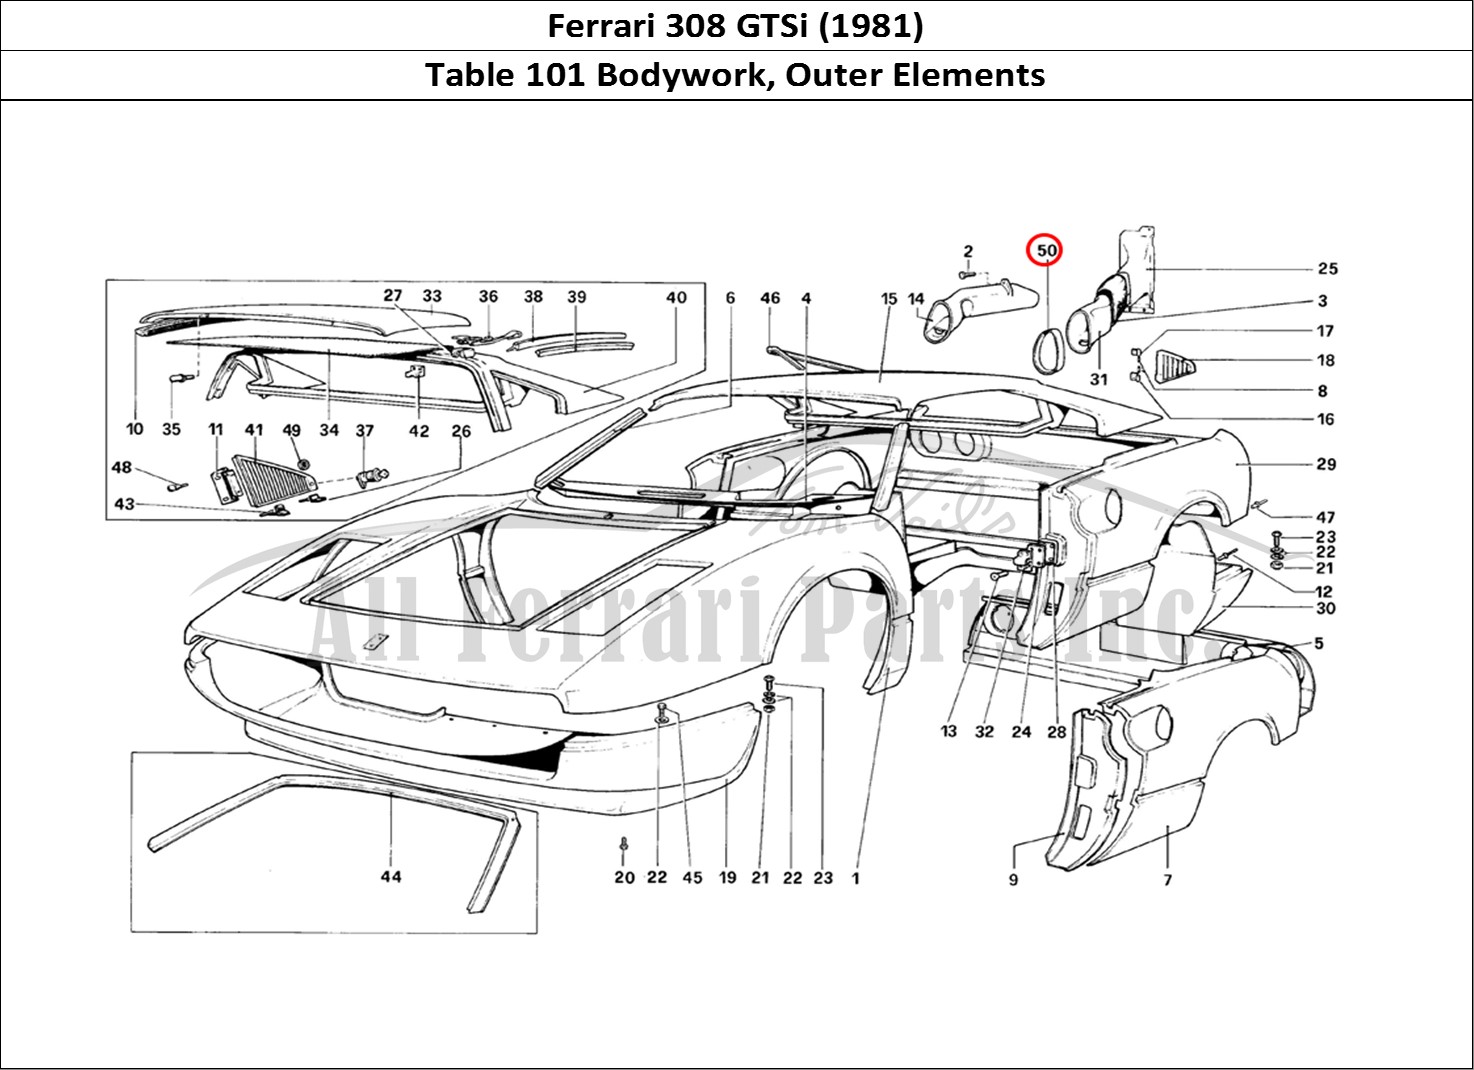 Ferrari Parts Ferrari 308 GTBi (1981) Page 101 Body Shell - Outer Elemen